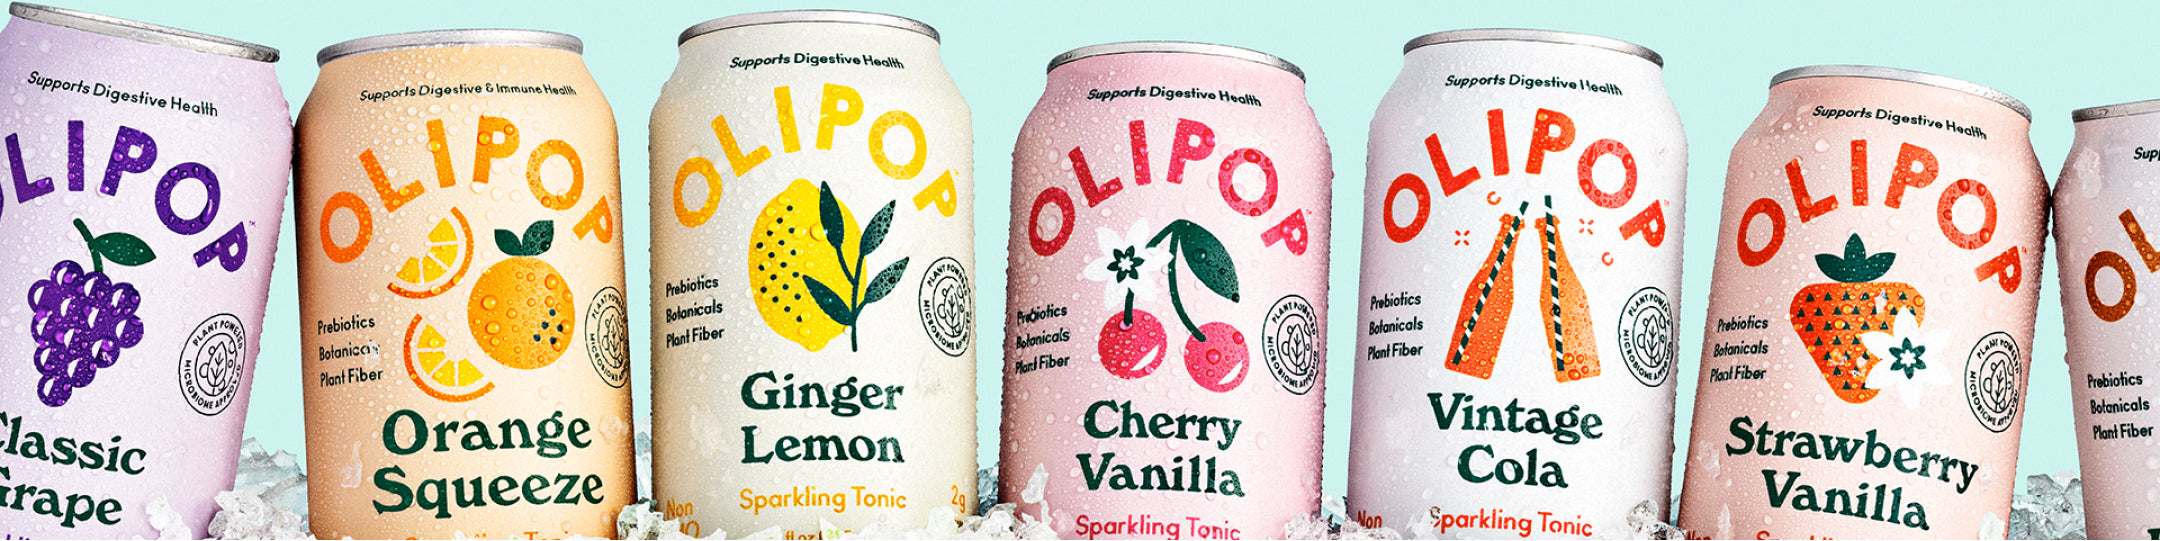 Lineup of OLIPOP flavors